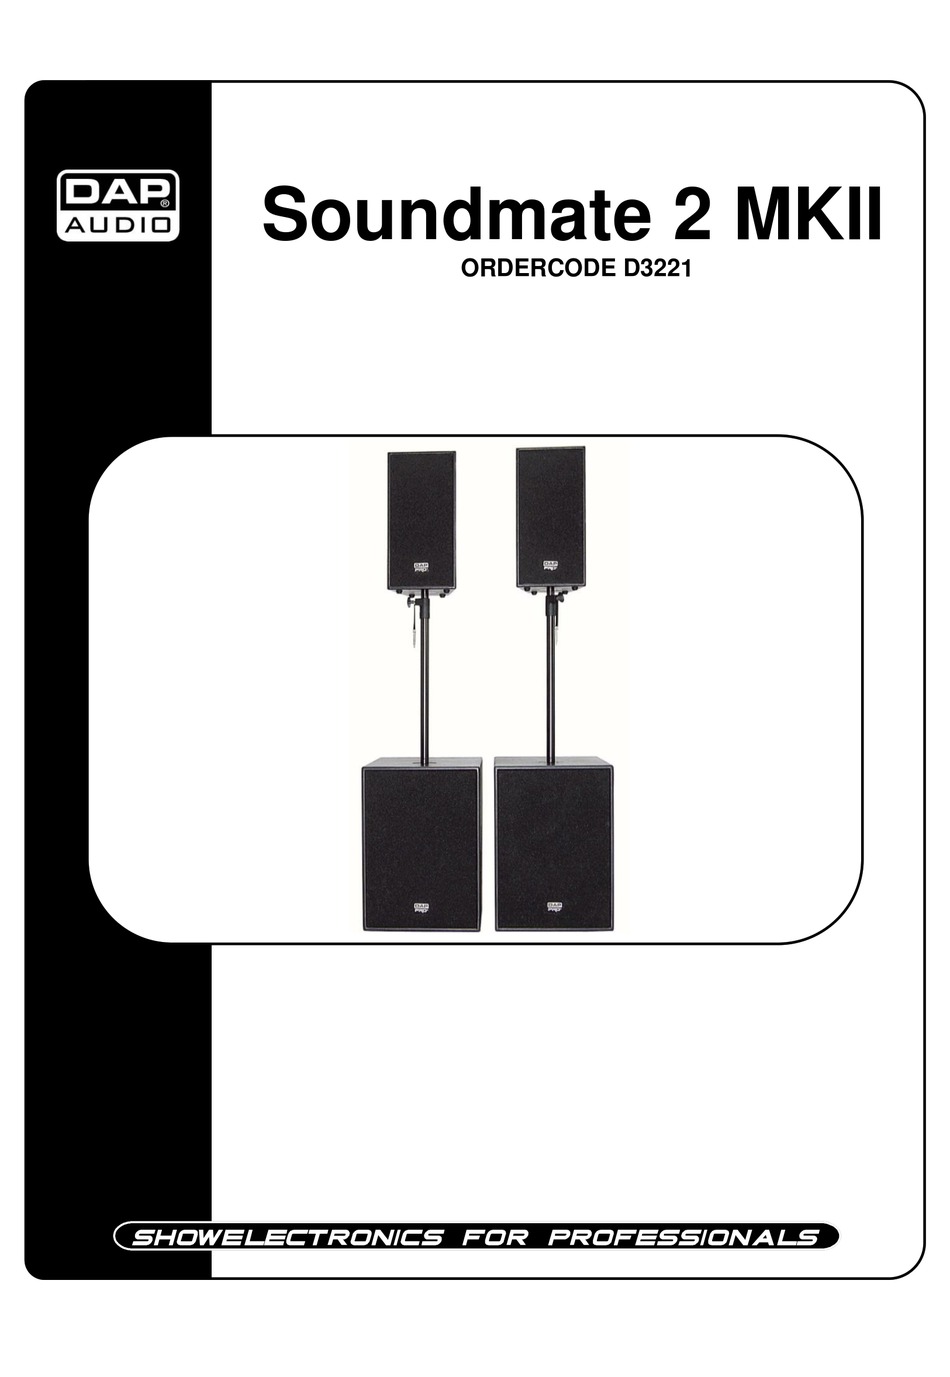 soundmate m2 manual